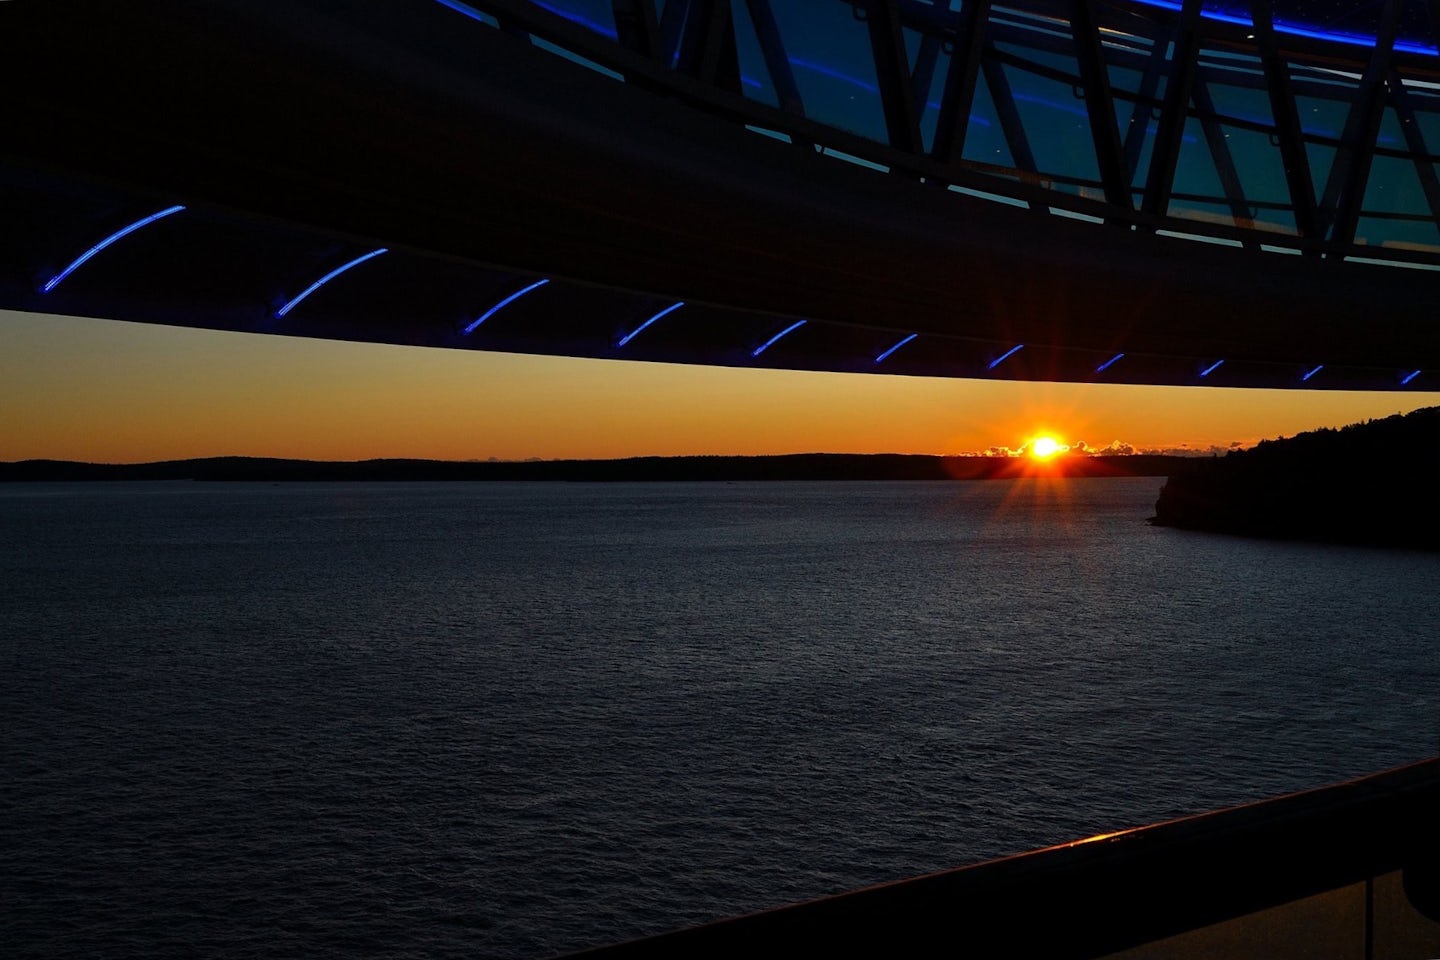 Good Morning Bar Harbor Maine.  Beware the skywalk above the Marina Deck if you take photos.